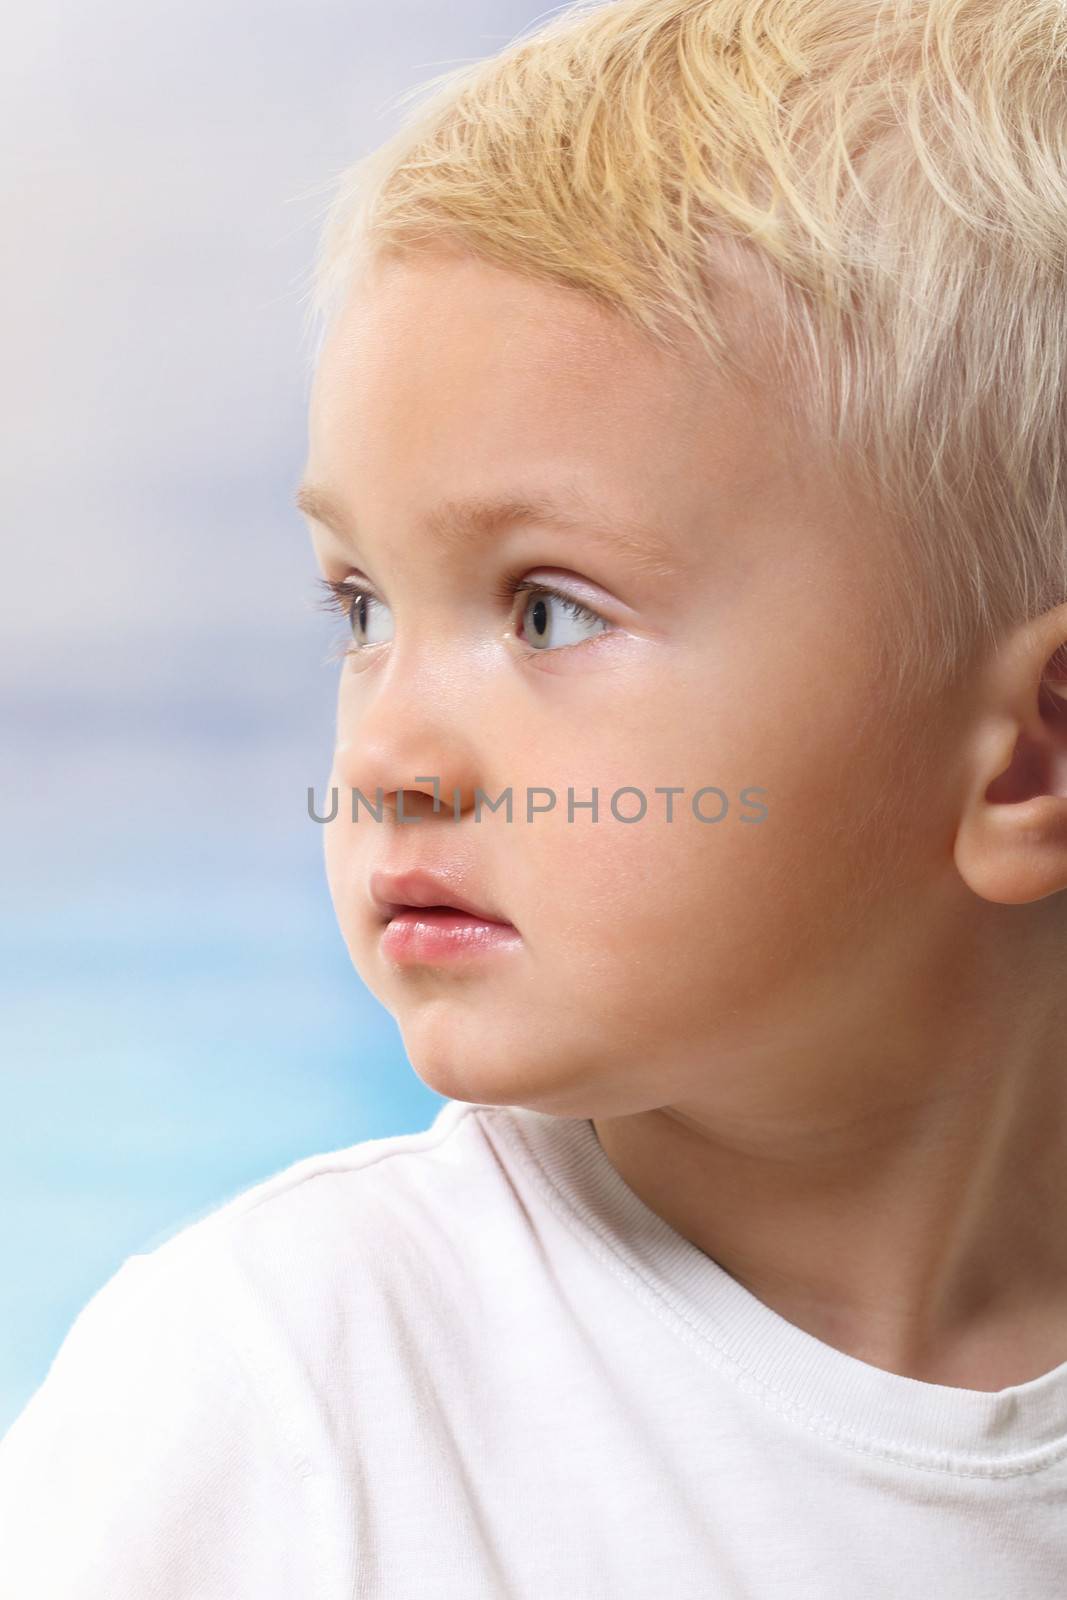 Beautiful little boy on the beach by robert_przybysz